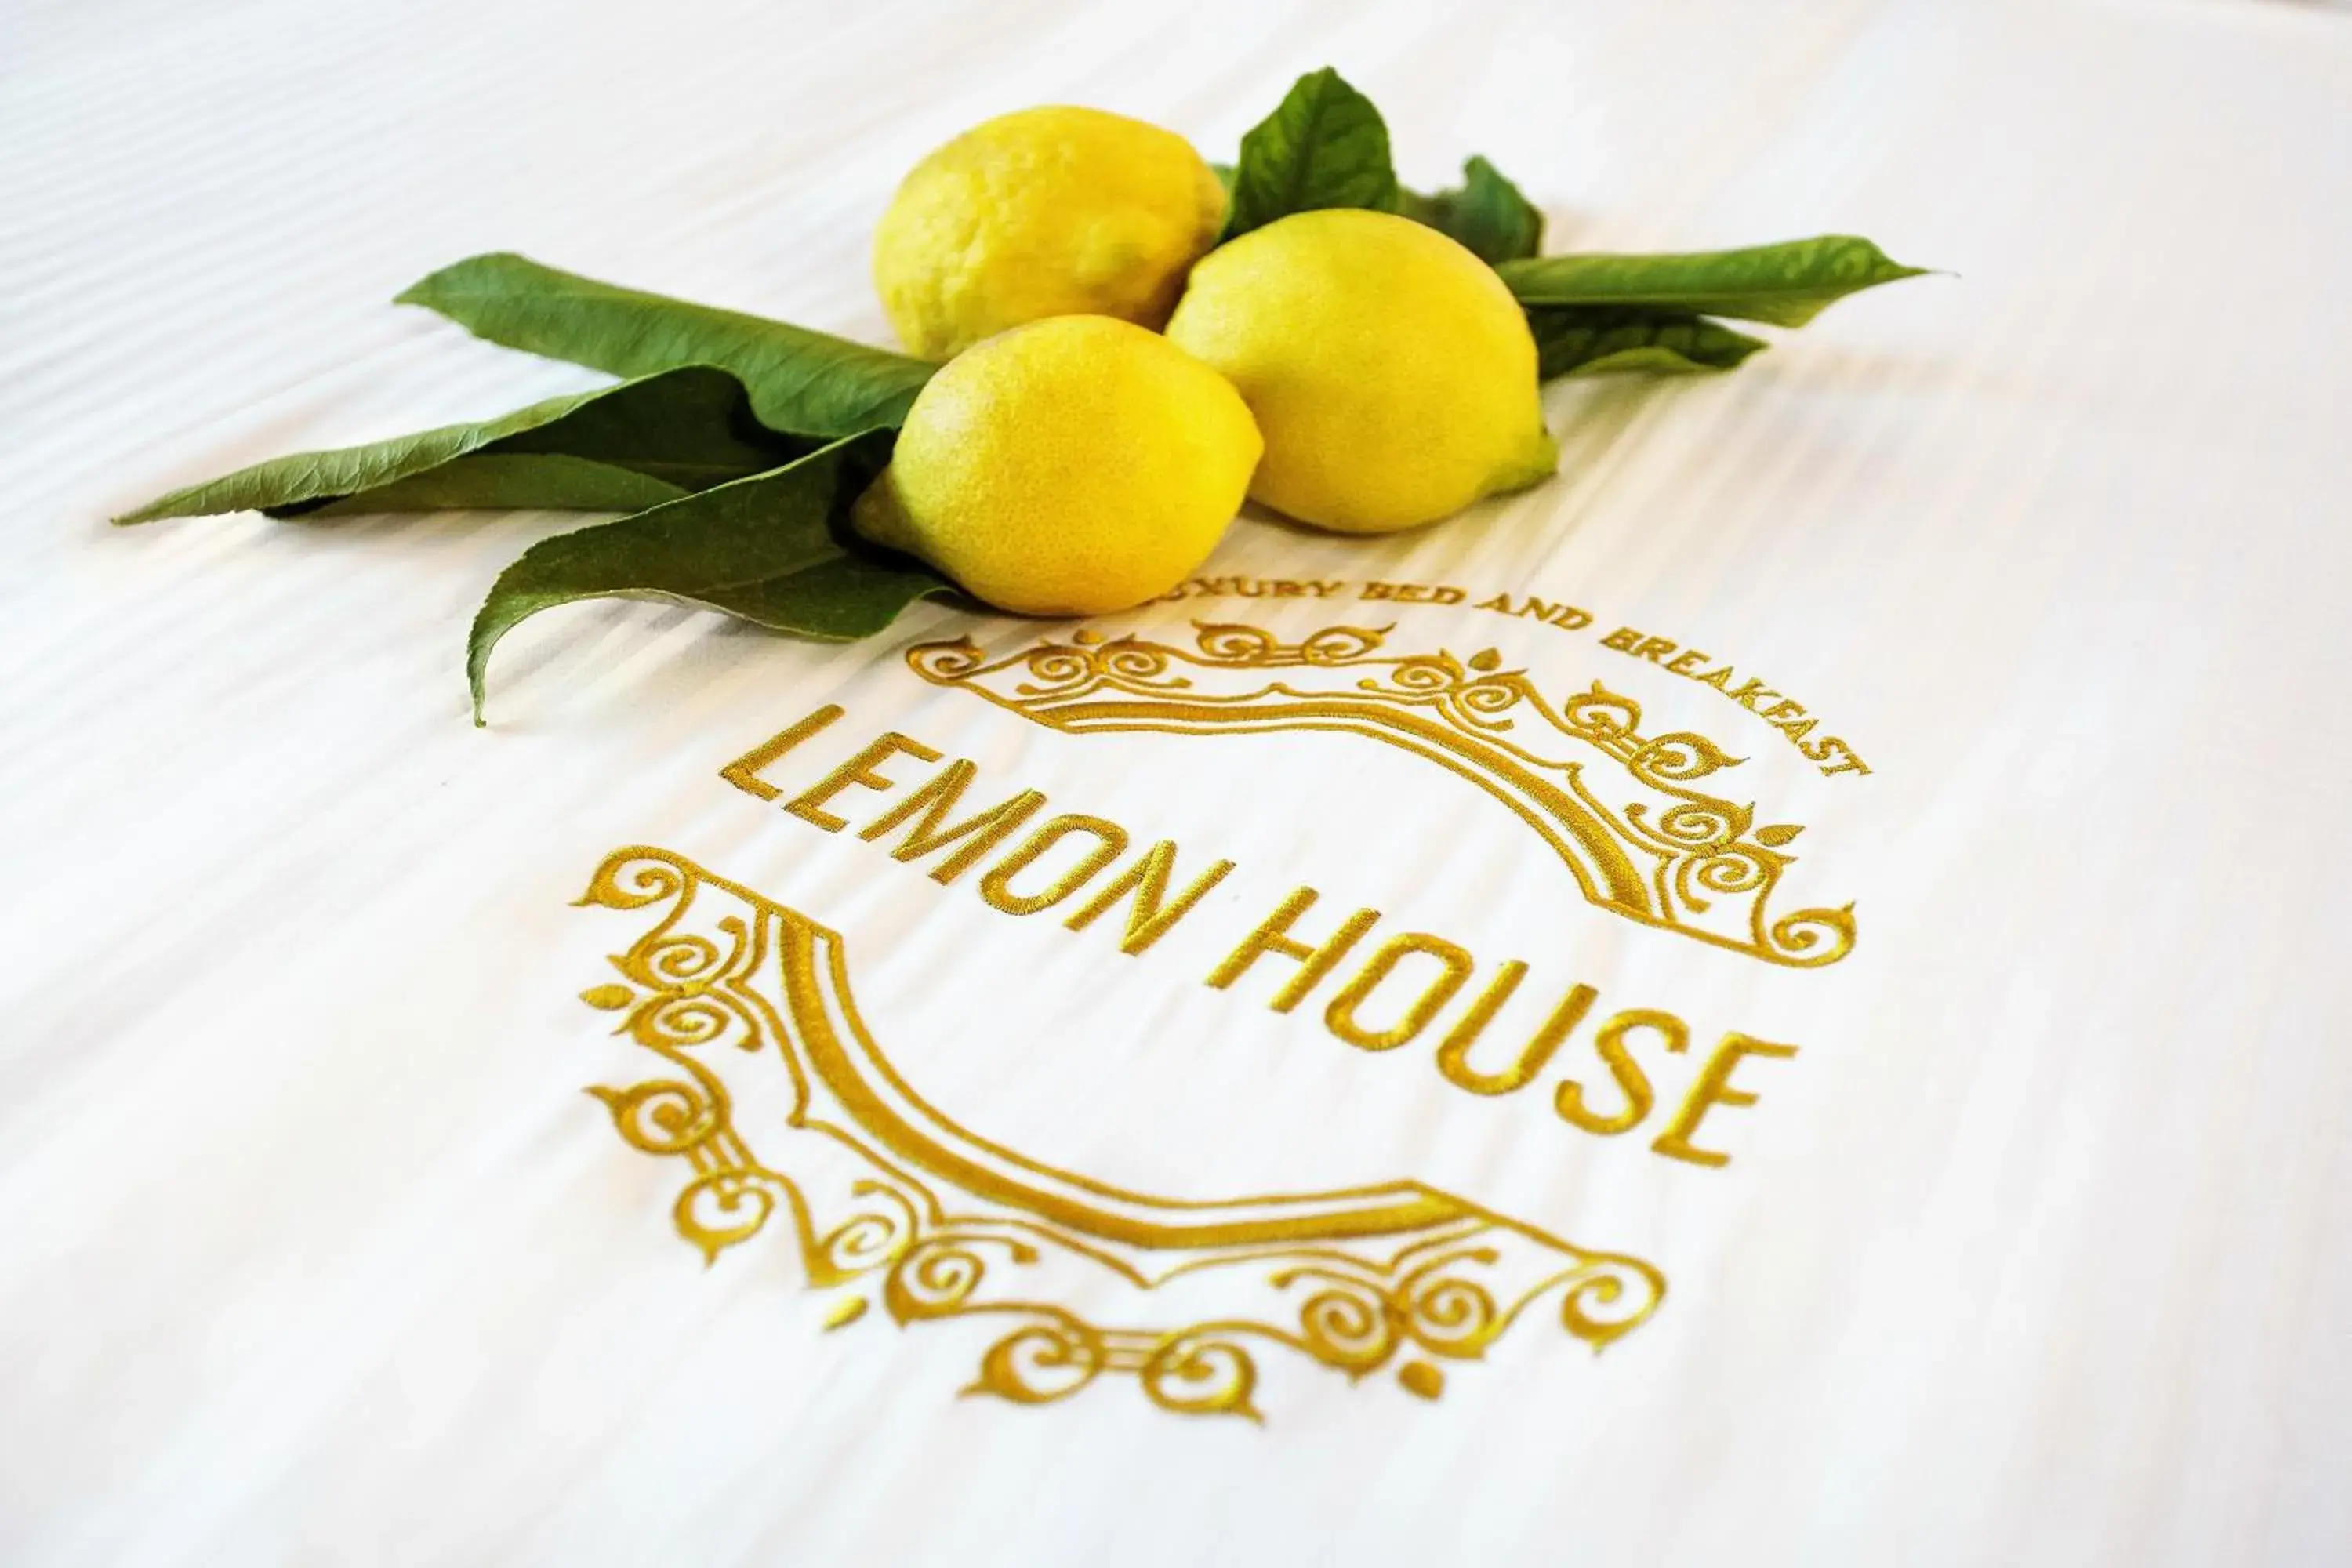 Property logo or sign in Lemon House